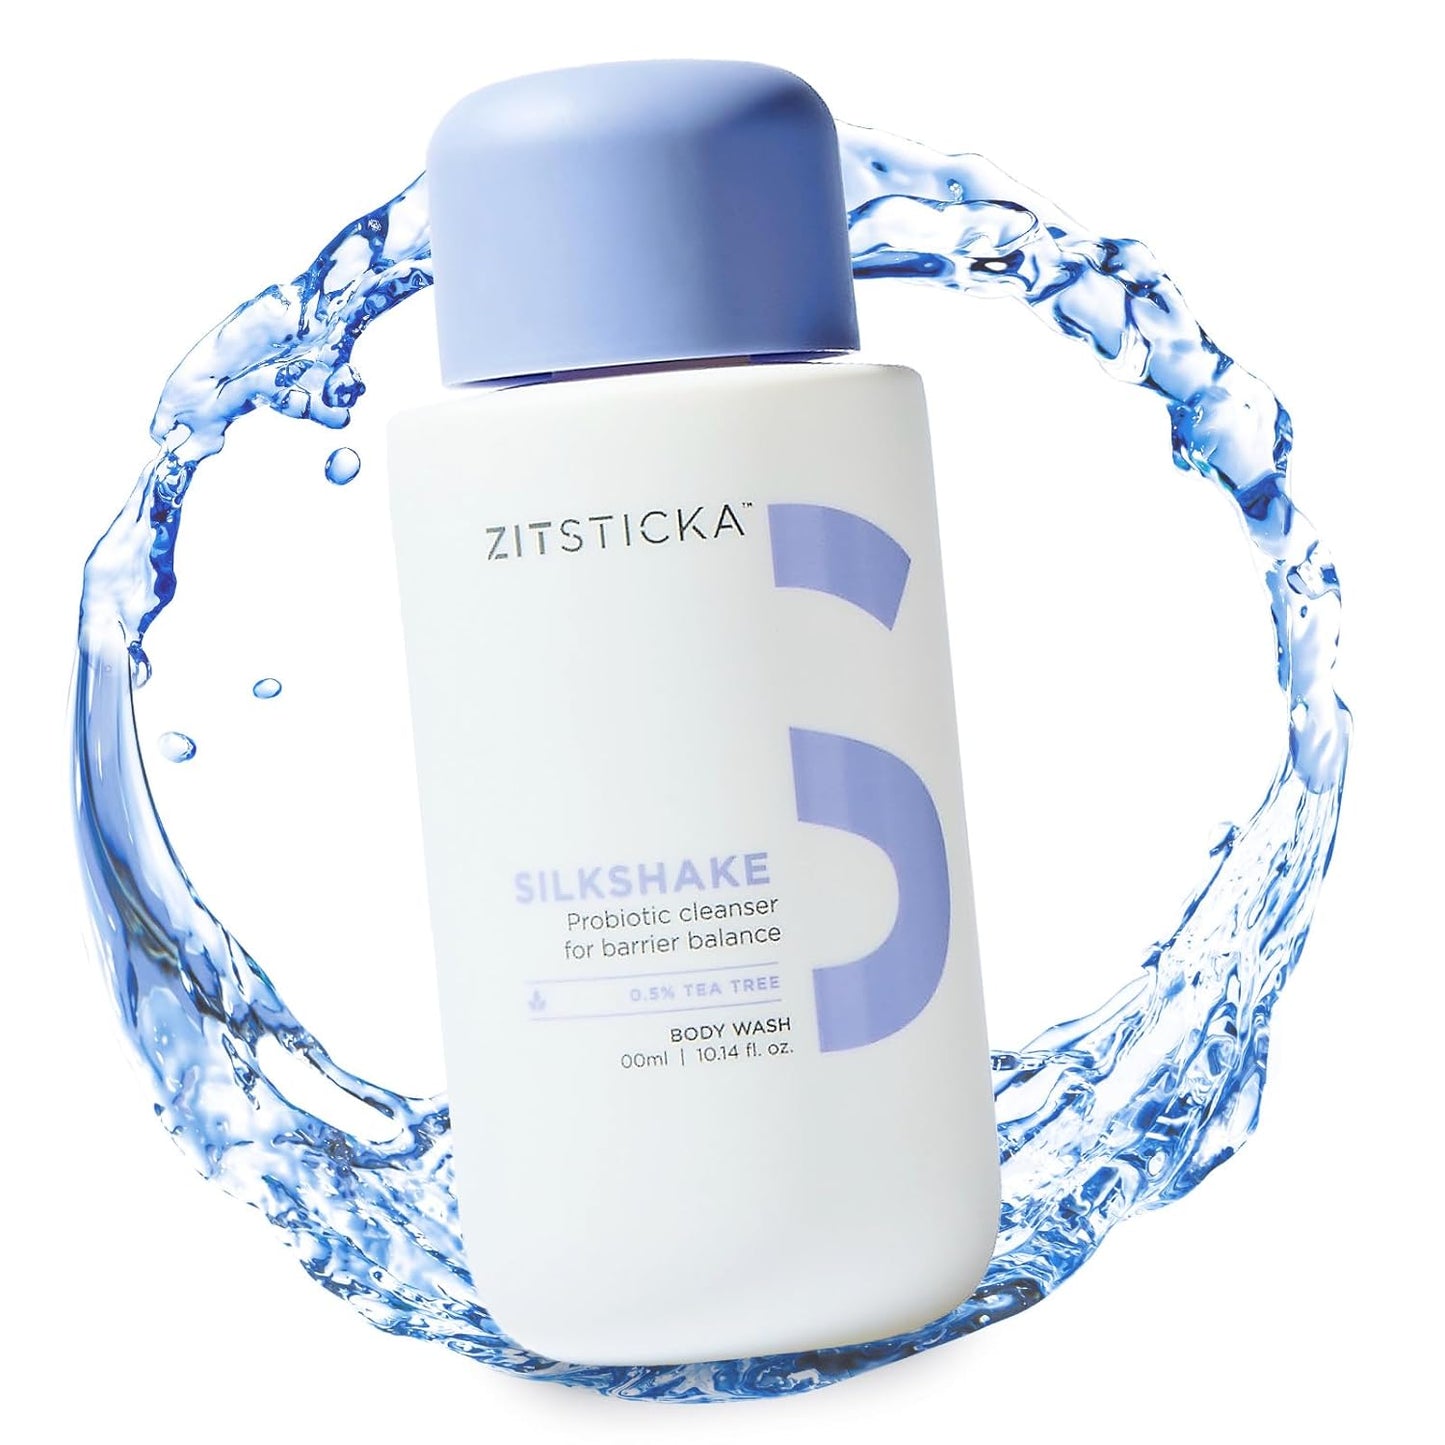 Zitsticka - SILKSHAKE Probiotic cleanser for breakout-prone bodies | 300 mL